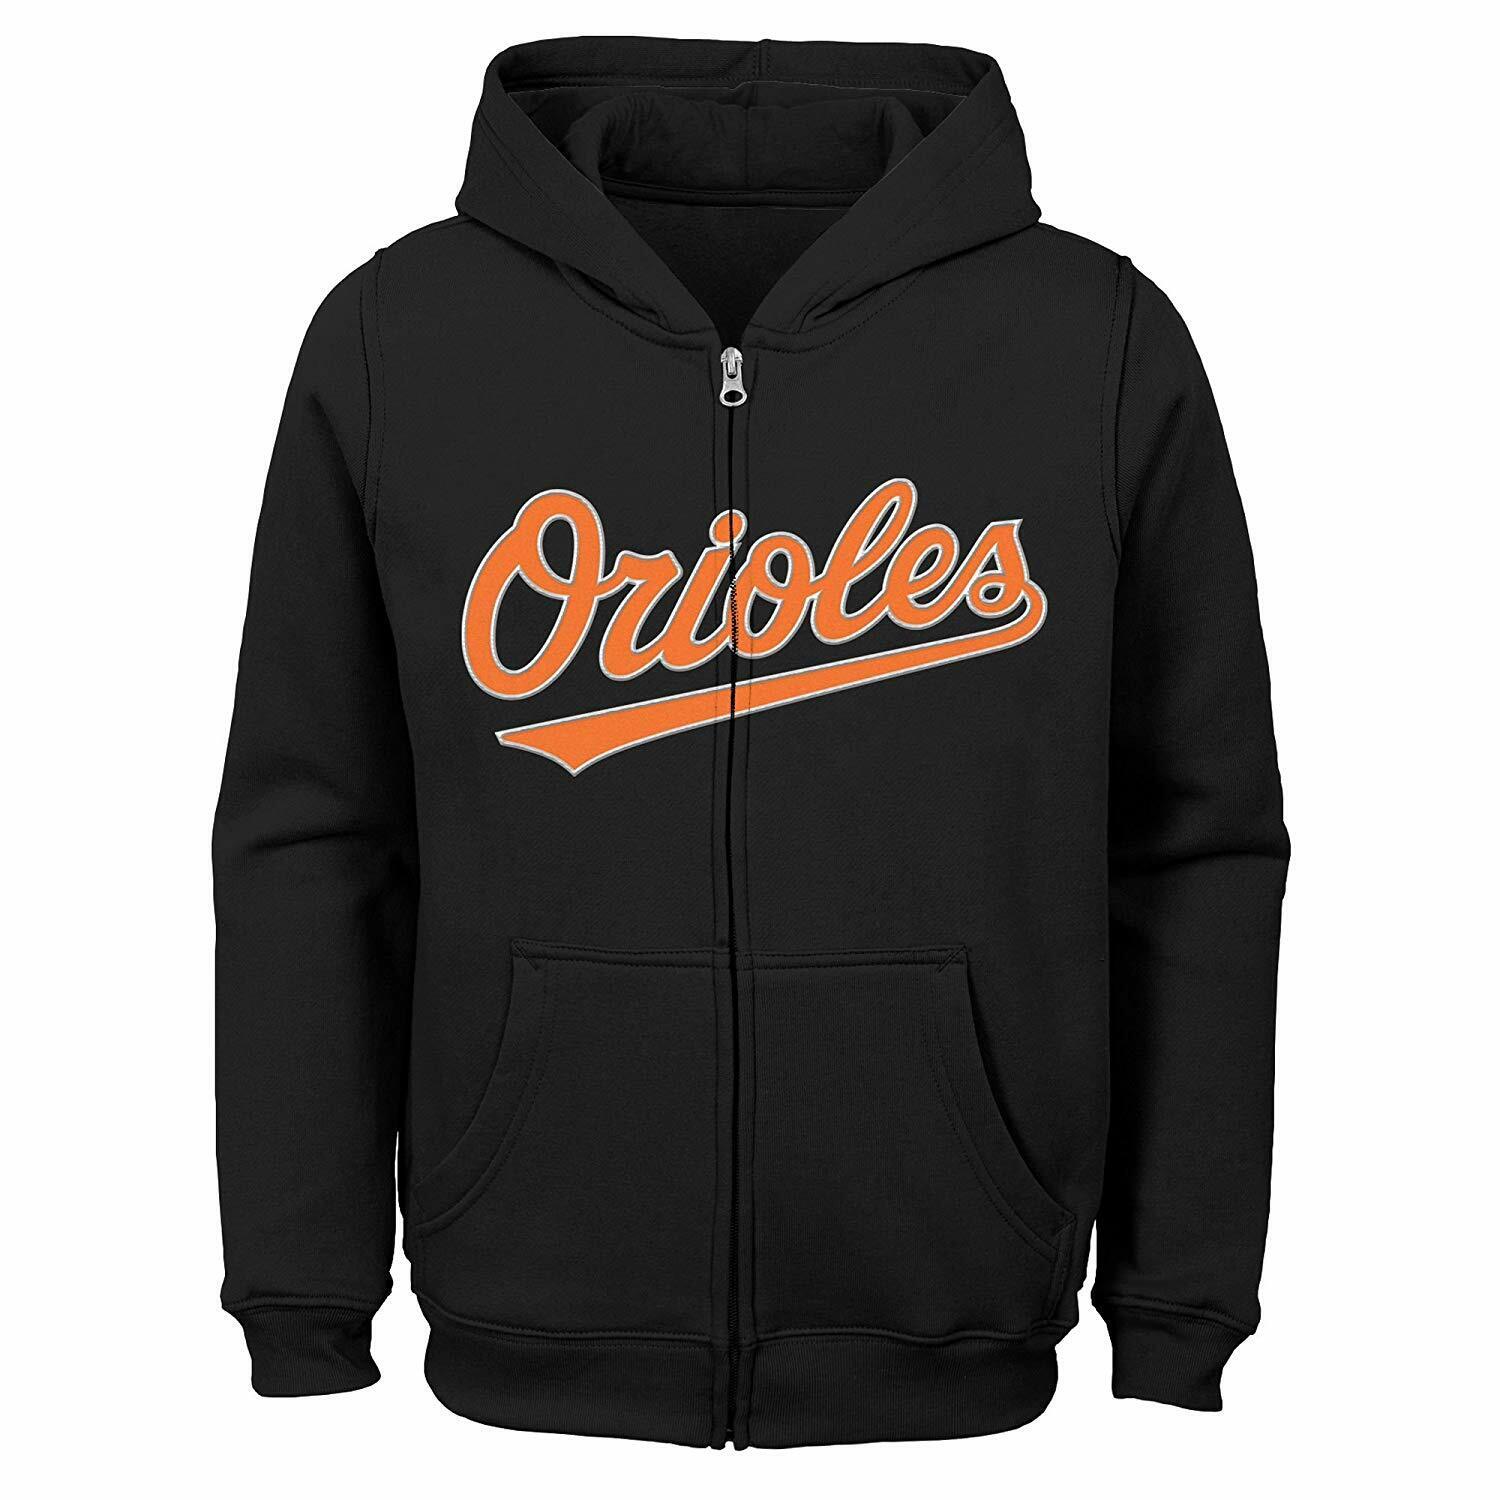 Baltimore Orioles Full Zip Youth Hooded Sweatshirt